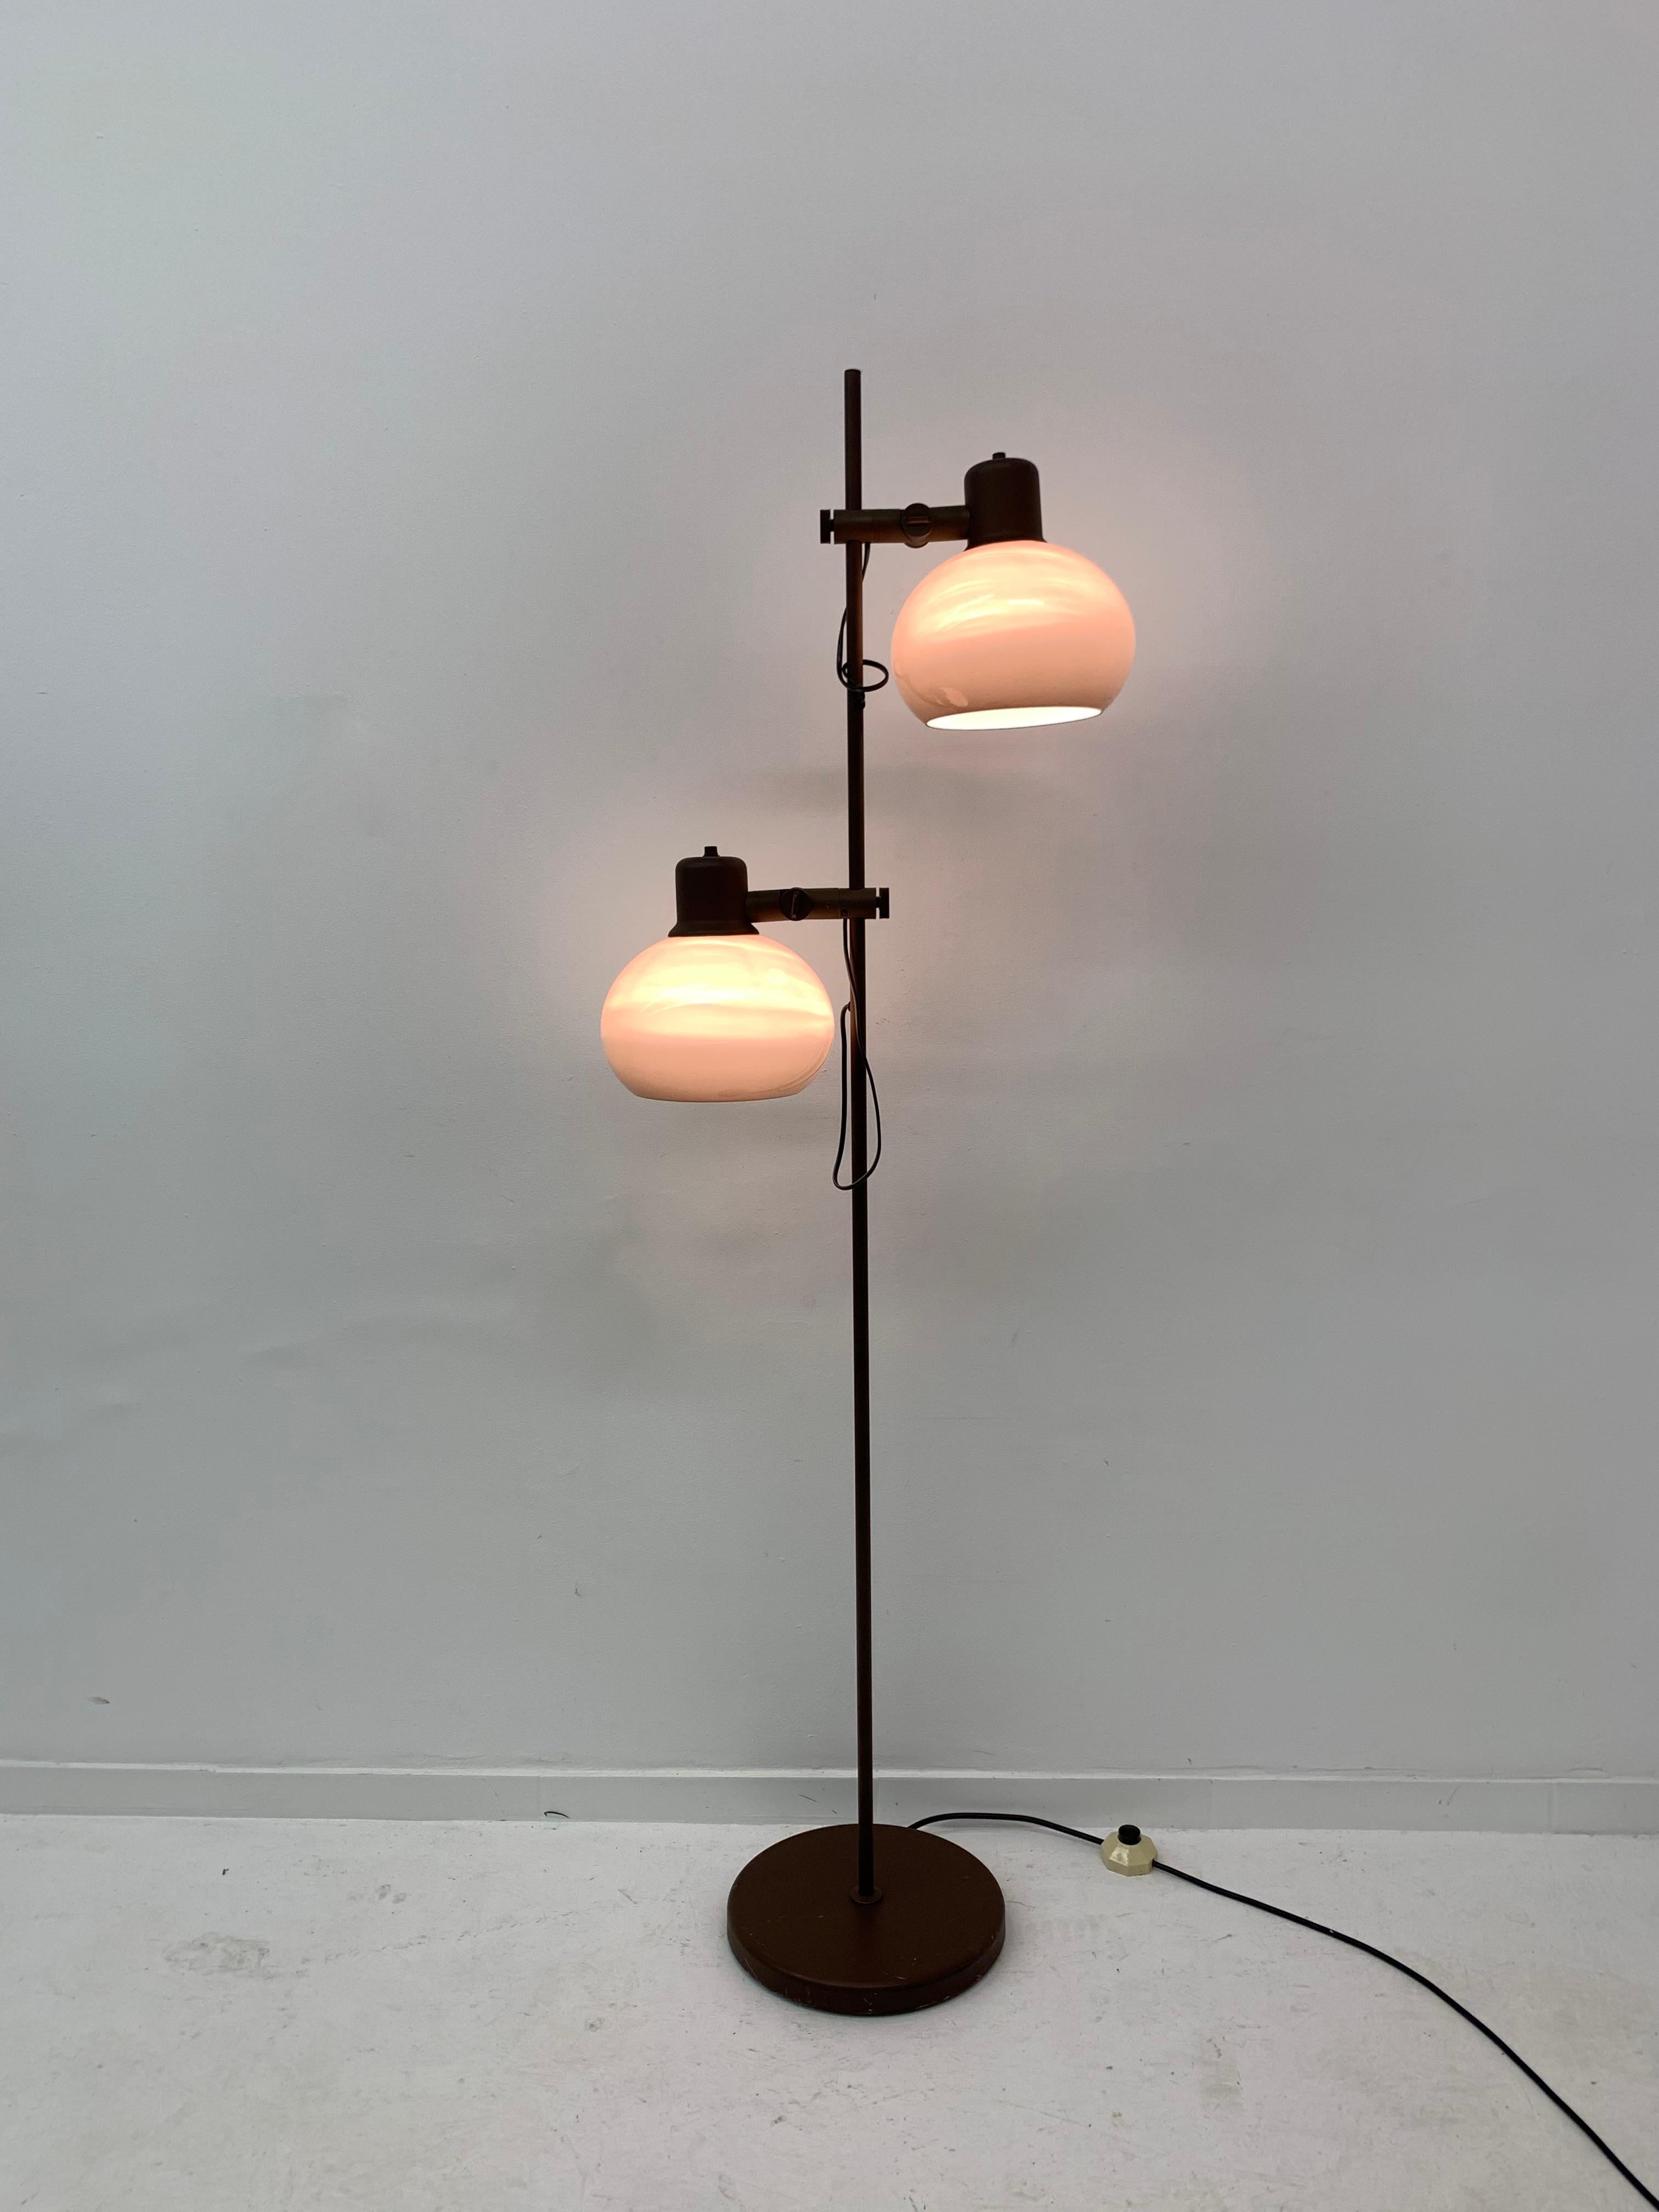 Fin du 20e siècle Dijkstra mushroom space age design lampadaire Dutch design retro vintage, 1970's en vente